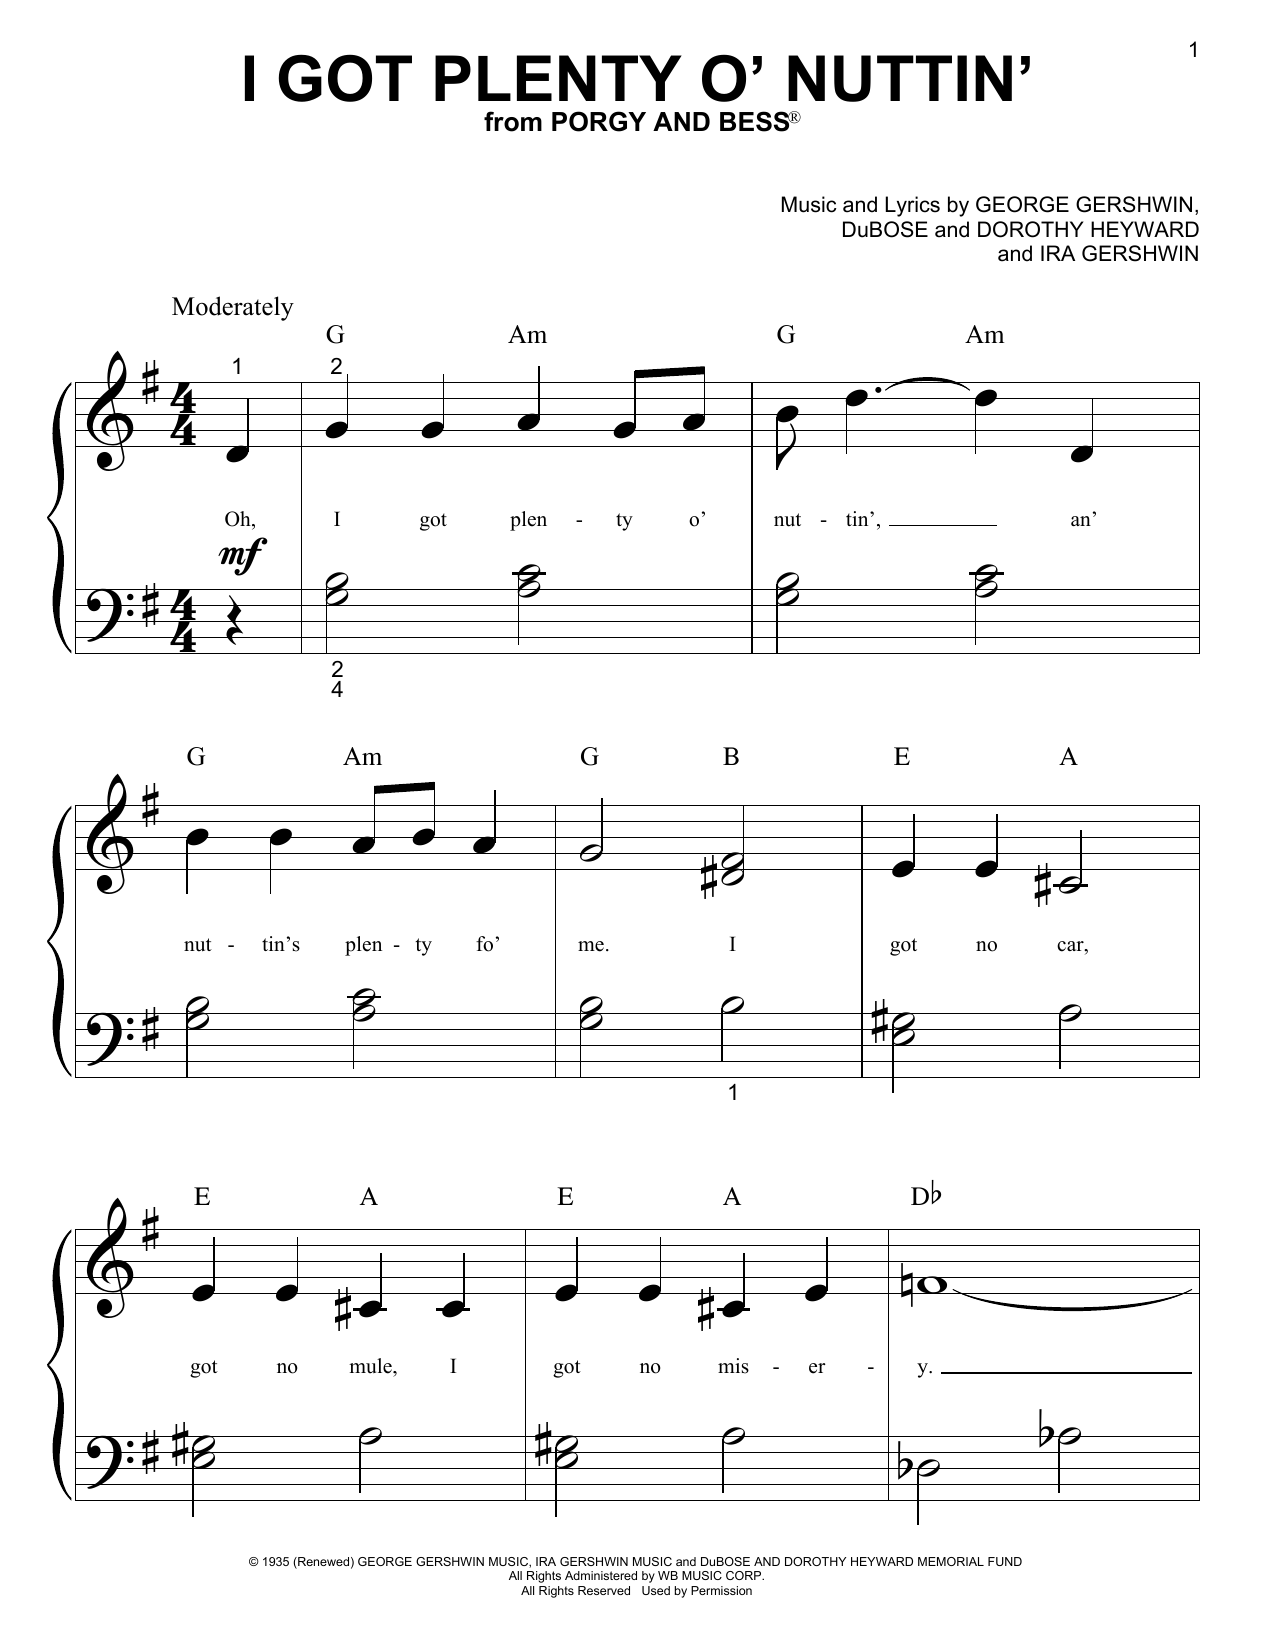 George Gershwin I Got Plenty O' Nuttin' Sheet Music Notes & Chords for Tenor Saxophone - Download or Print PDF